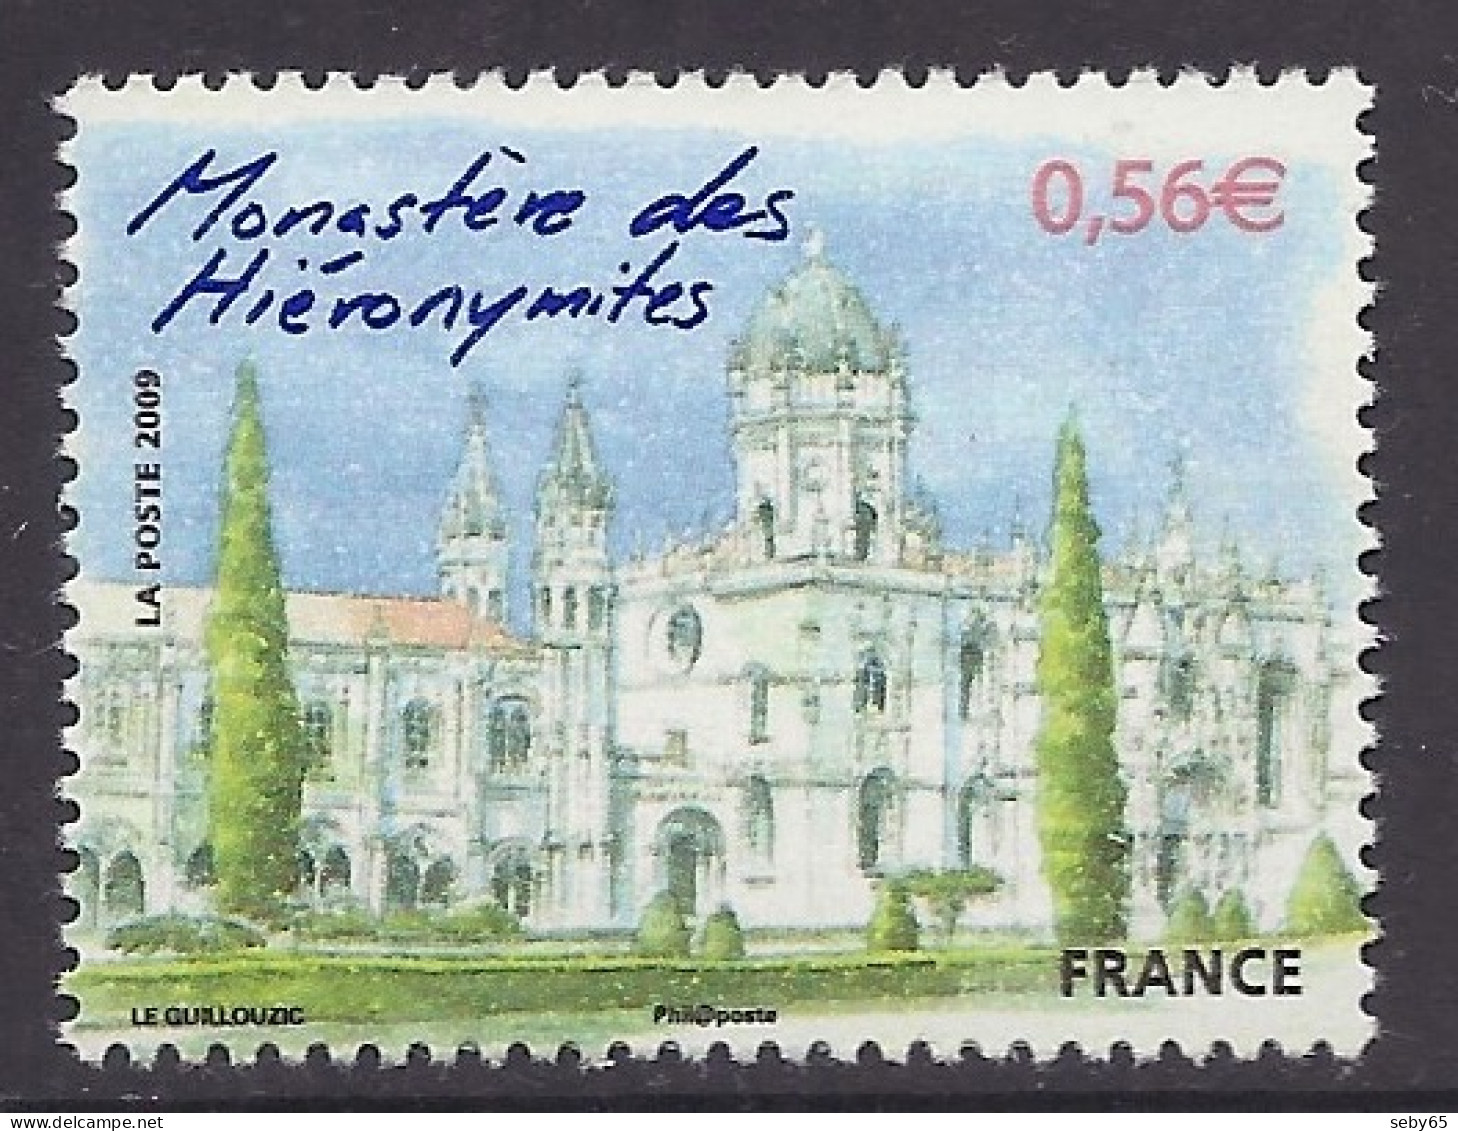 France 2009 - Capitales Européennes, Lisbonne, Lisboa, Lisbona, European Capitals, Monastery Of Hieronymites - MNH - Unused Stamps